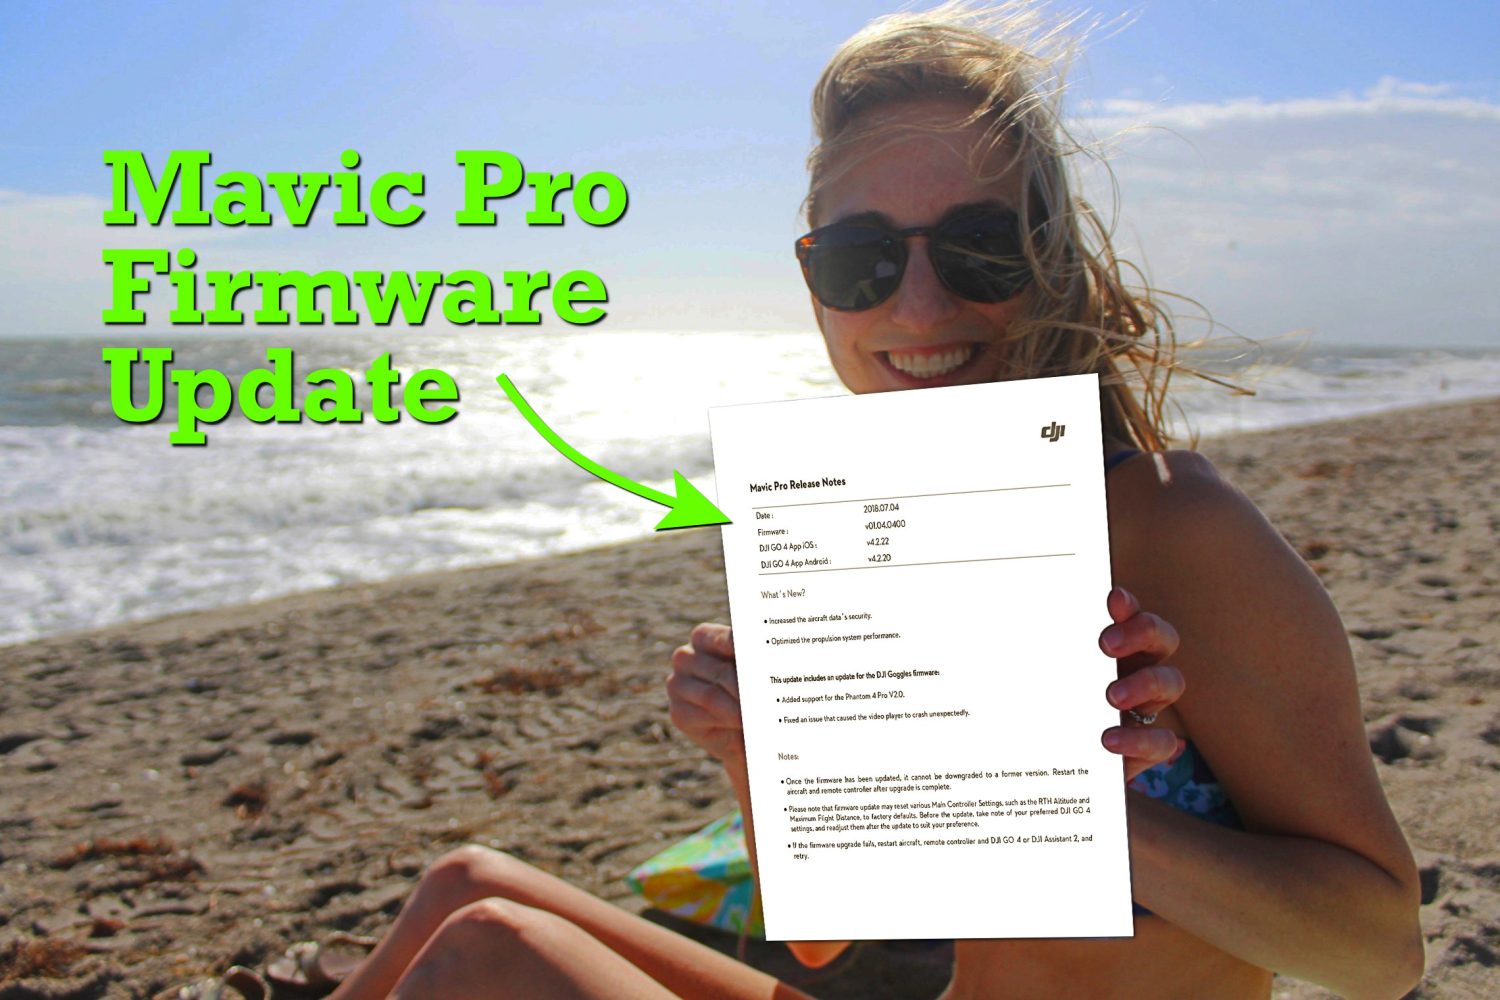 DJI Mavic Pro firmware update - v01.04.0400